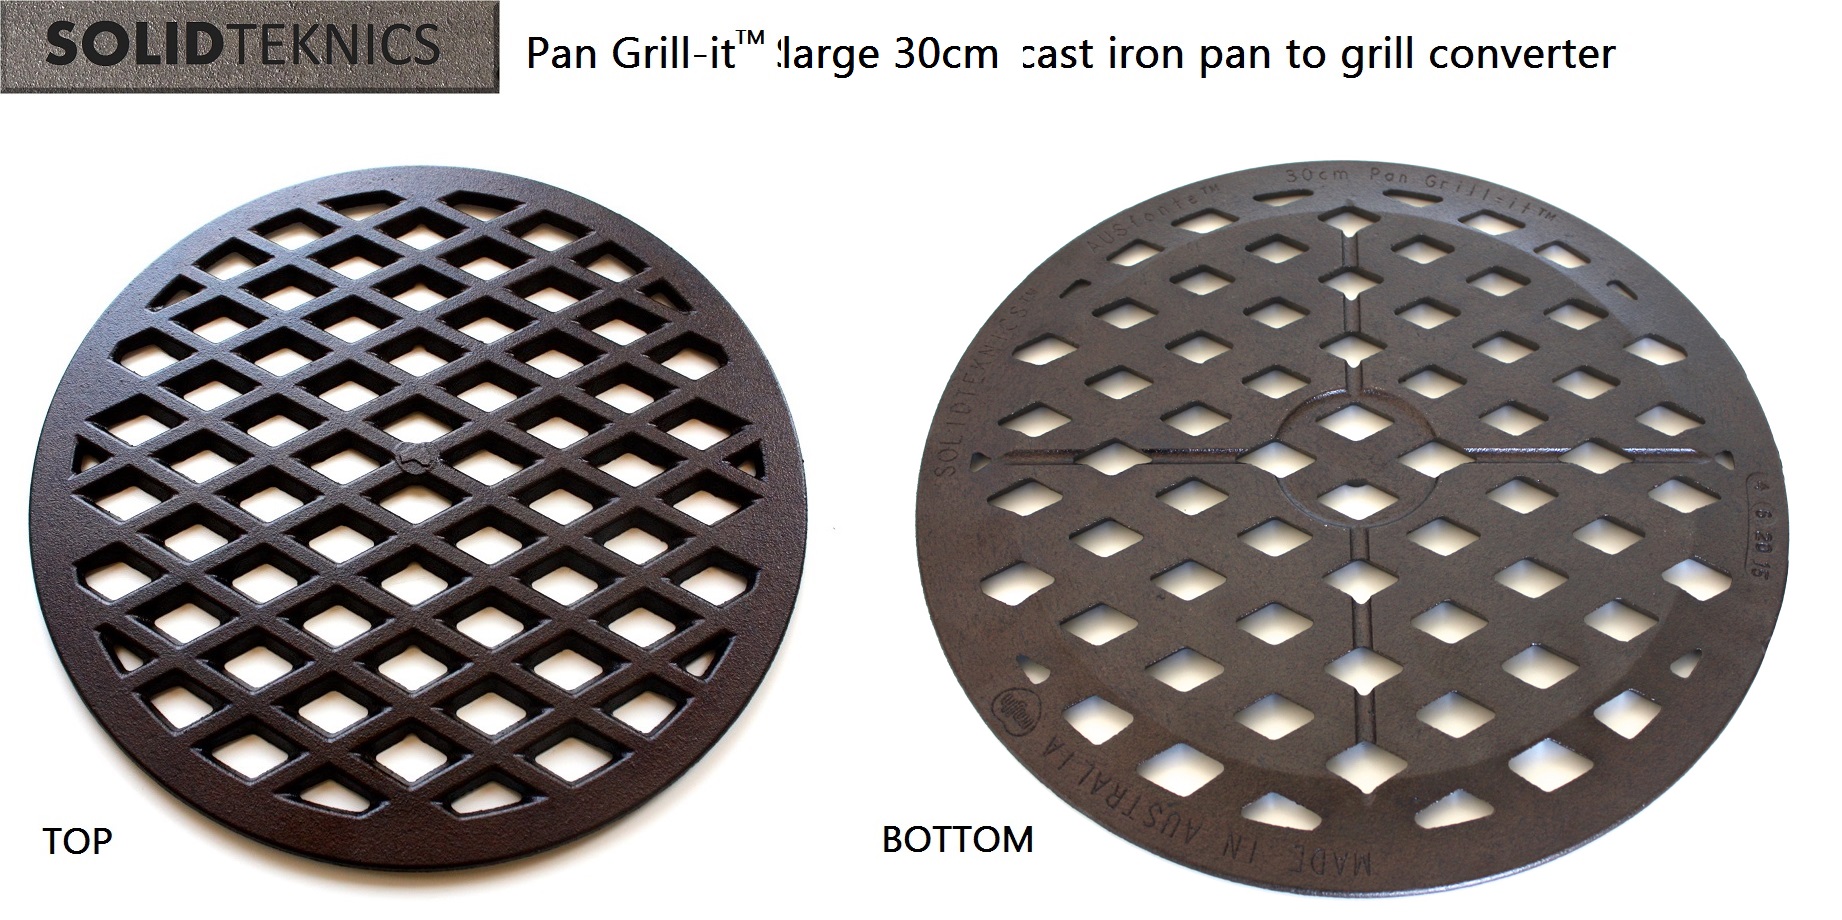 Solidteknics AUSfonte Pan Grill-it Large 30cm cast iron grilling insert back 12-6-15 1200x799.jpg